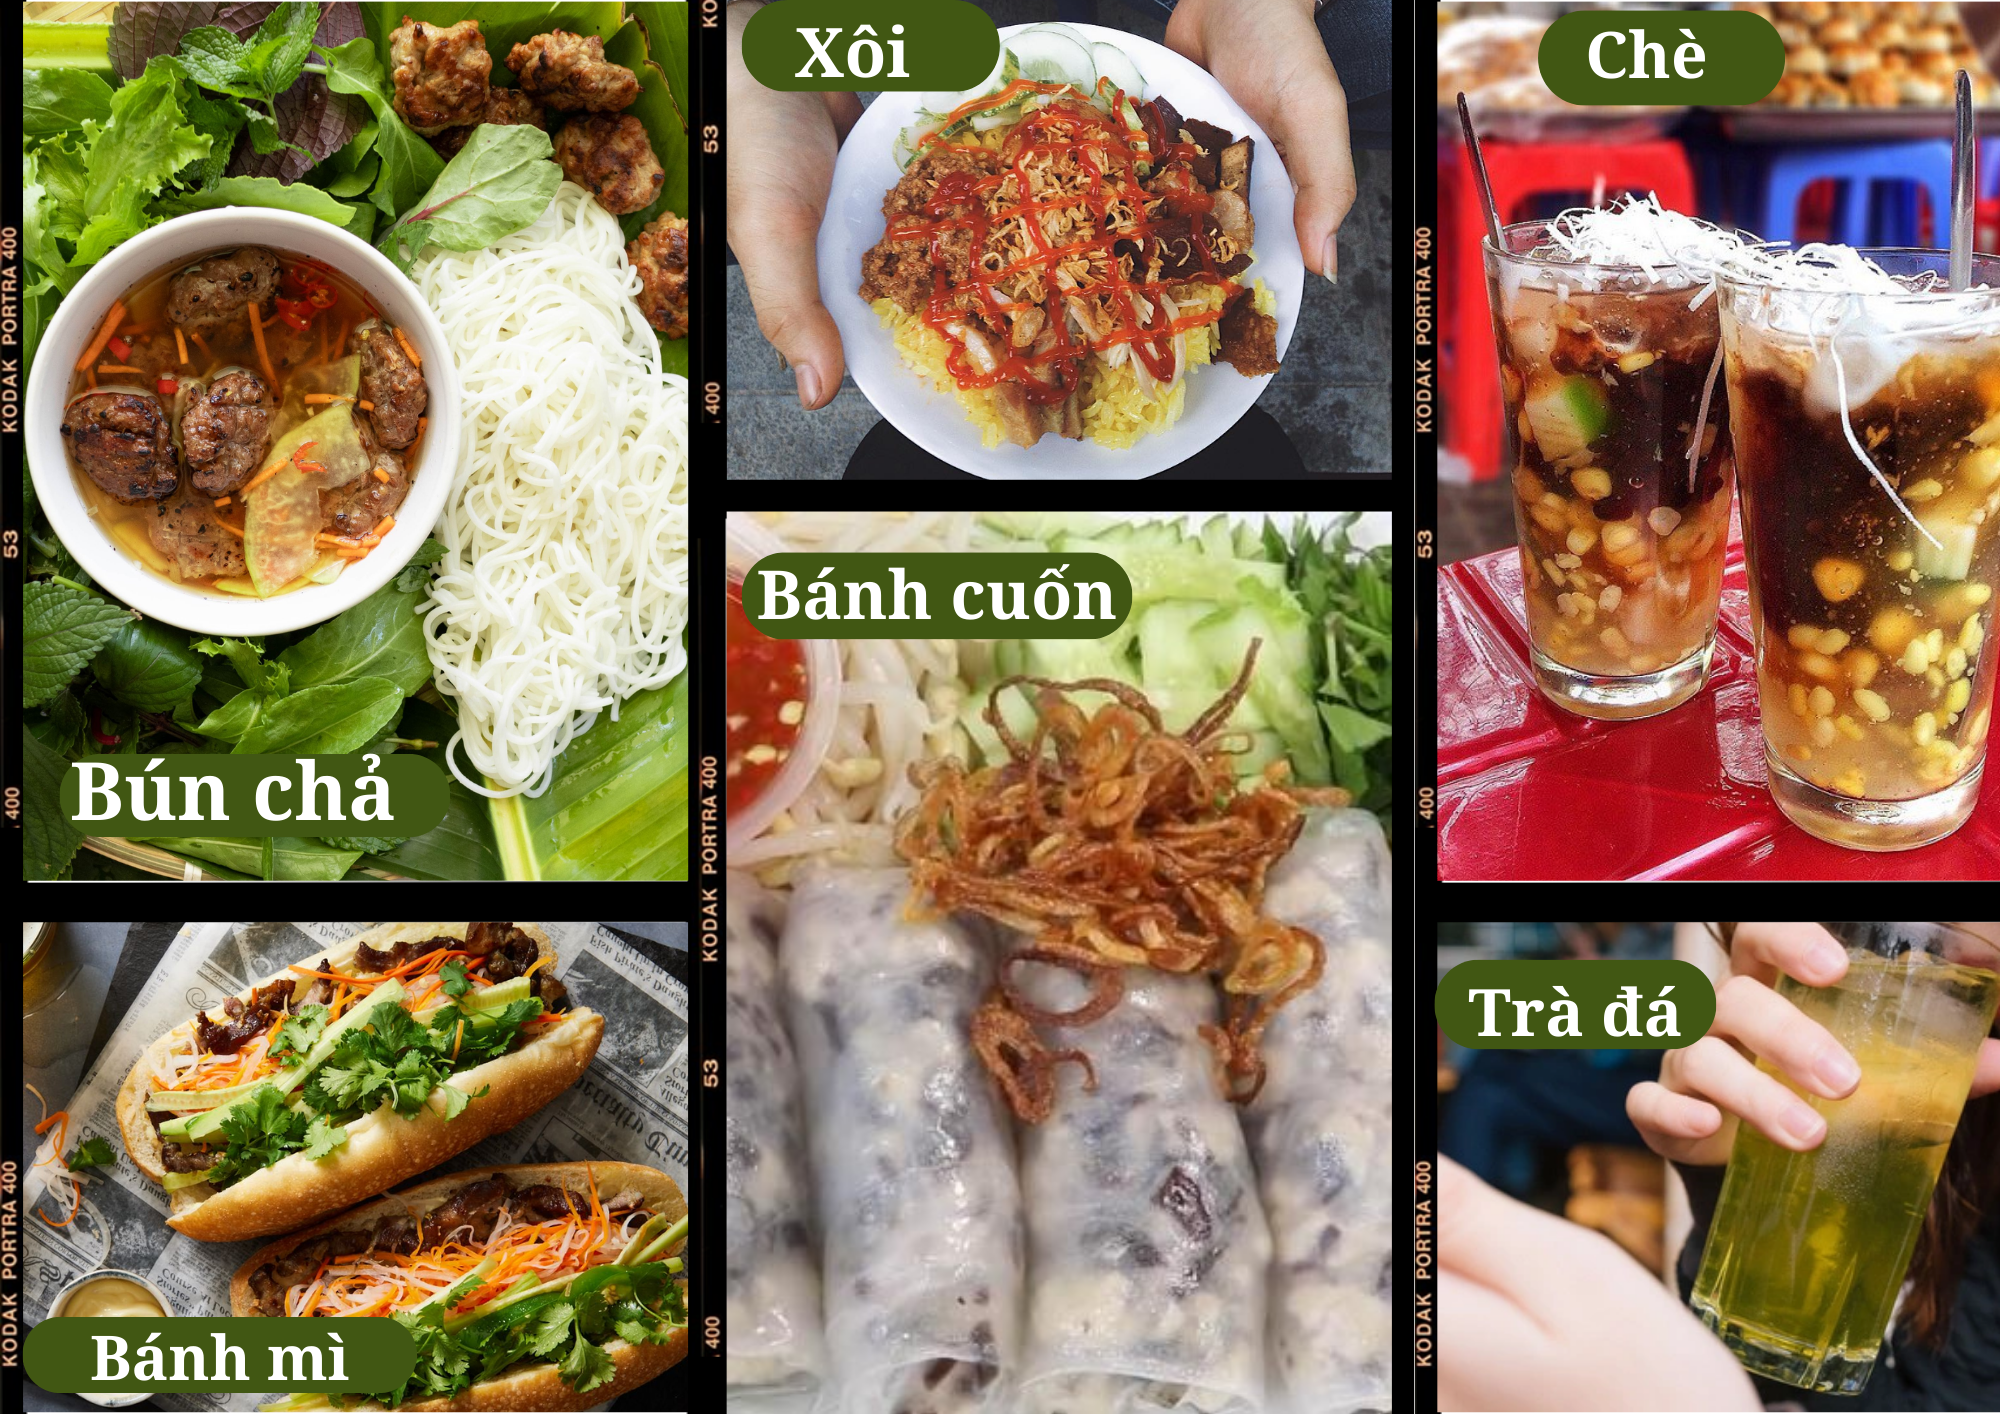 Dong Xuan market- food